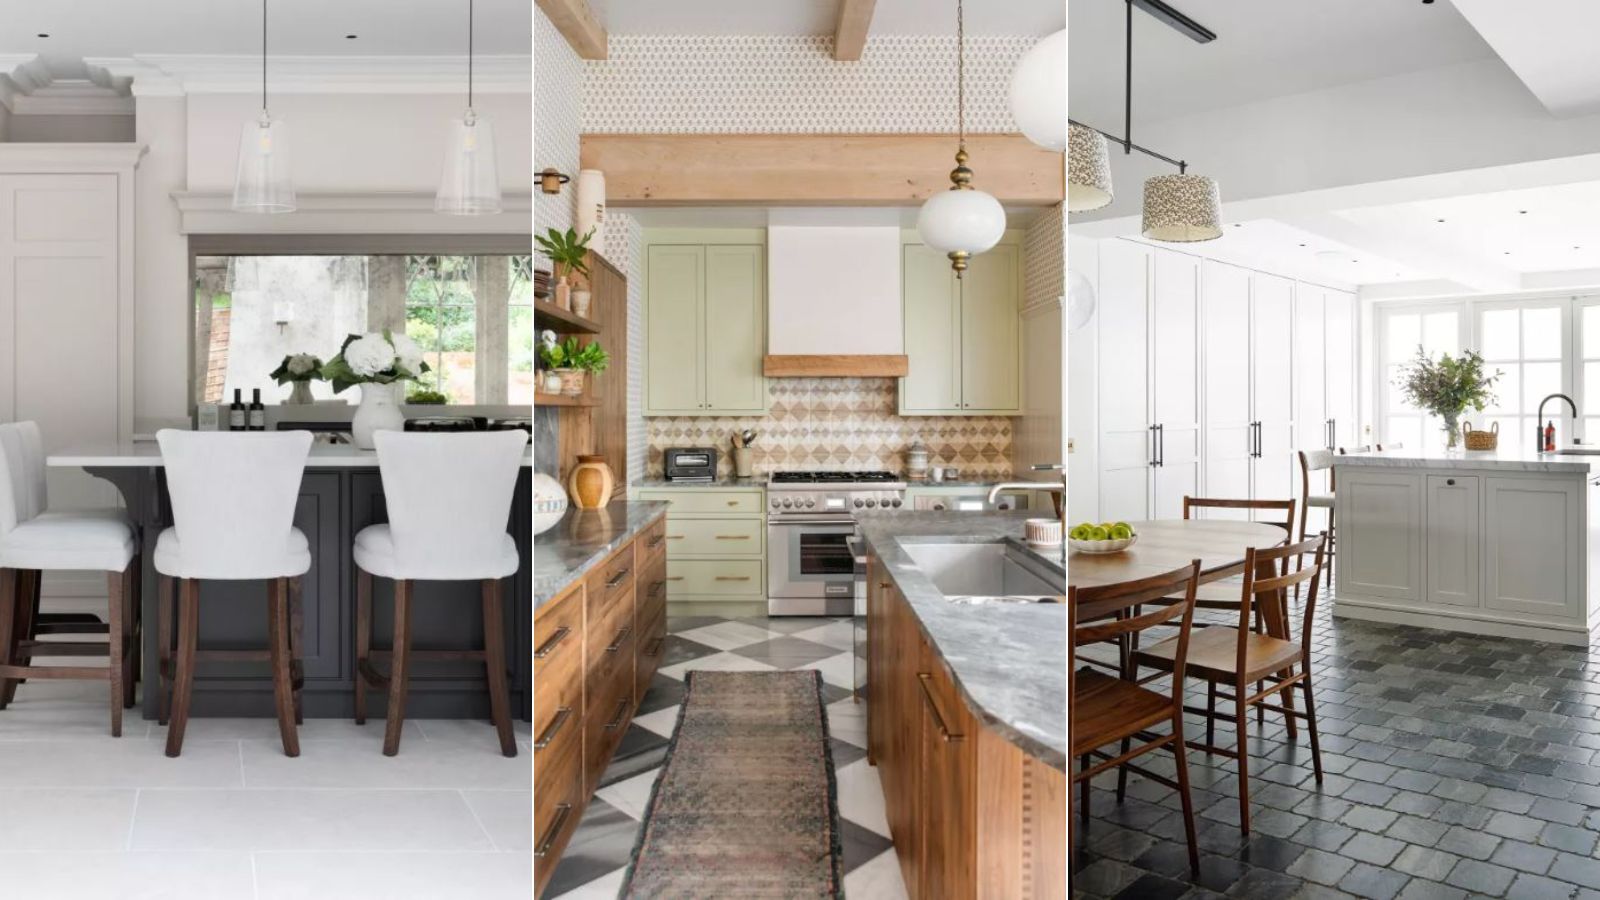 kitchen floor tile ideas – 19 handsome but hardwearing choices |